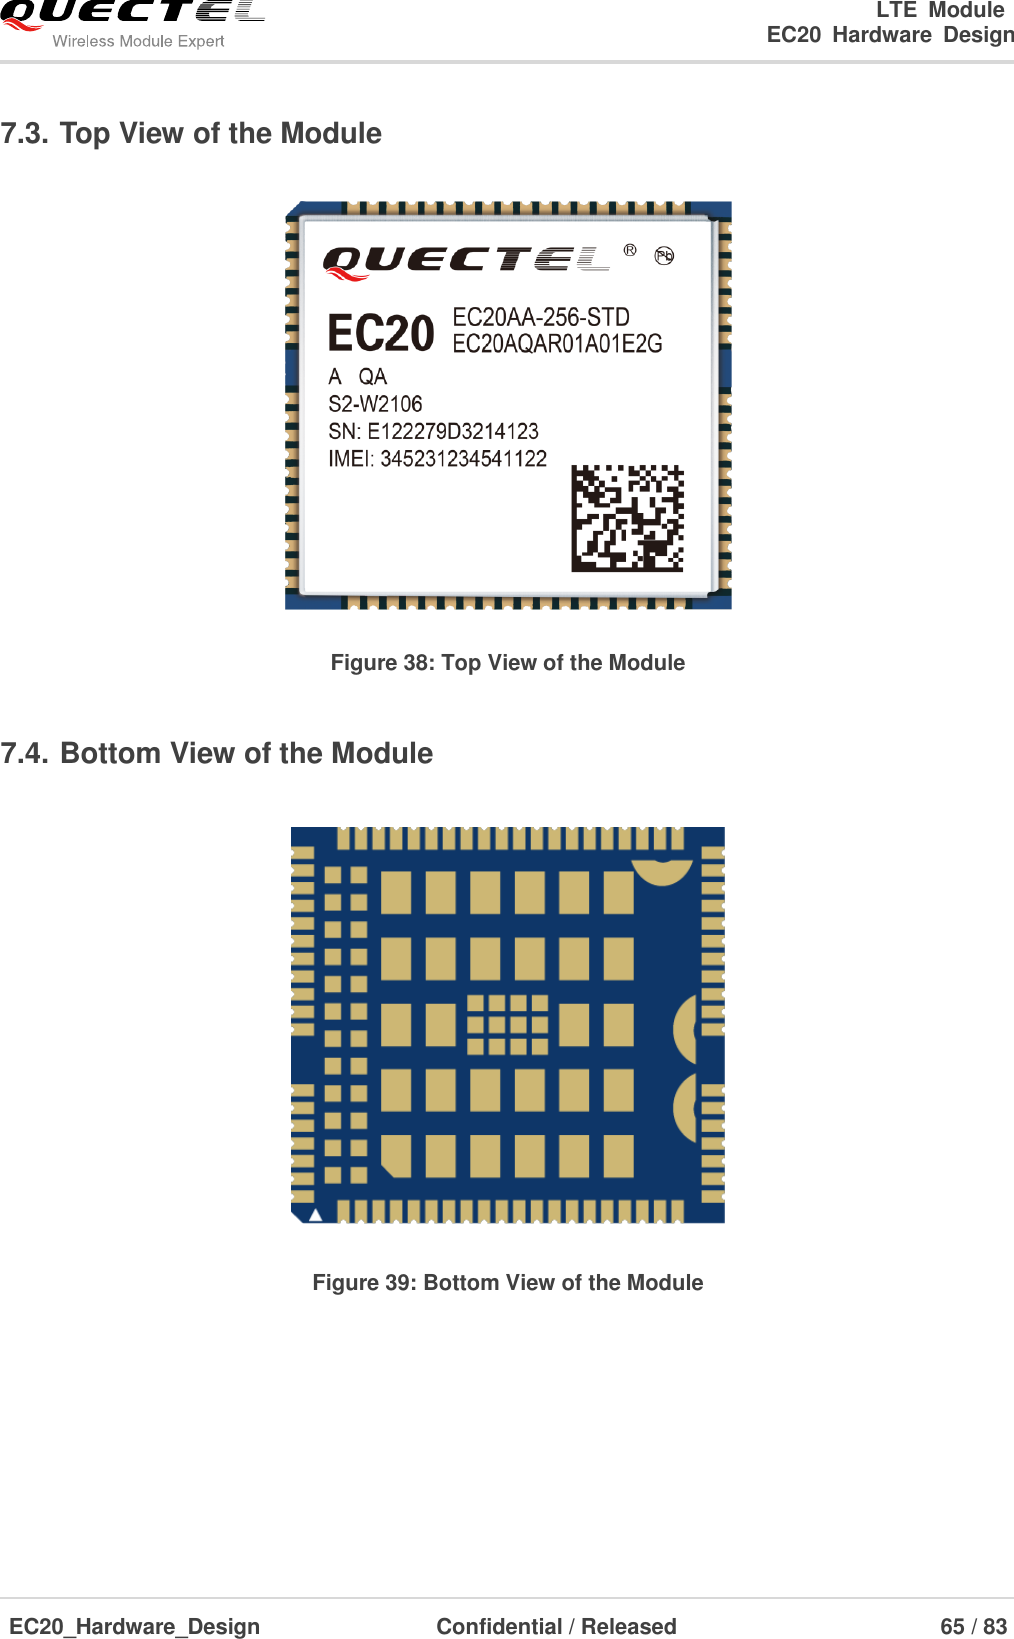                                                                        LTE  Module                                                                   EC20  Hardware  Design  EC20_Hardware_Design                  Confidential / Released                            65 / 83     7.3. Top View of the Module  Figure 38: Top View of the Module 7.4. Bottom View of the Module  Figure 39: Bottom View of the Module 